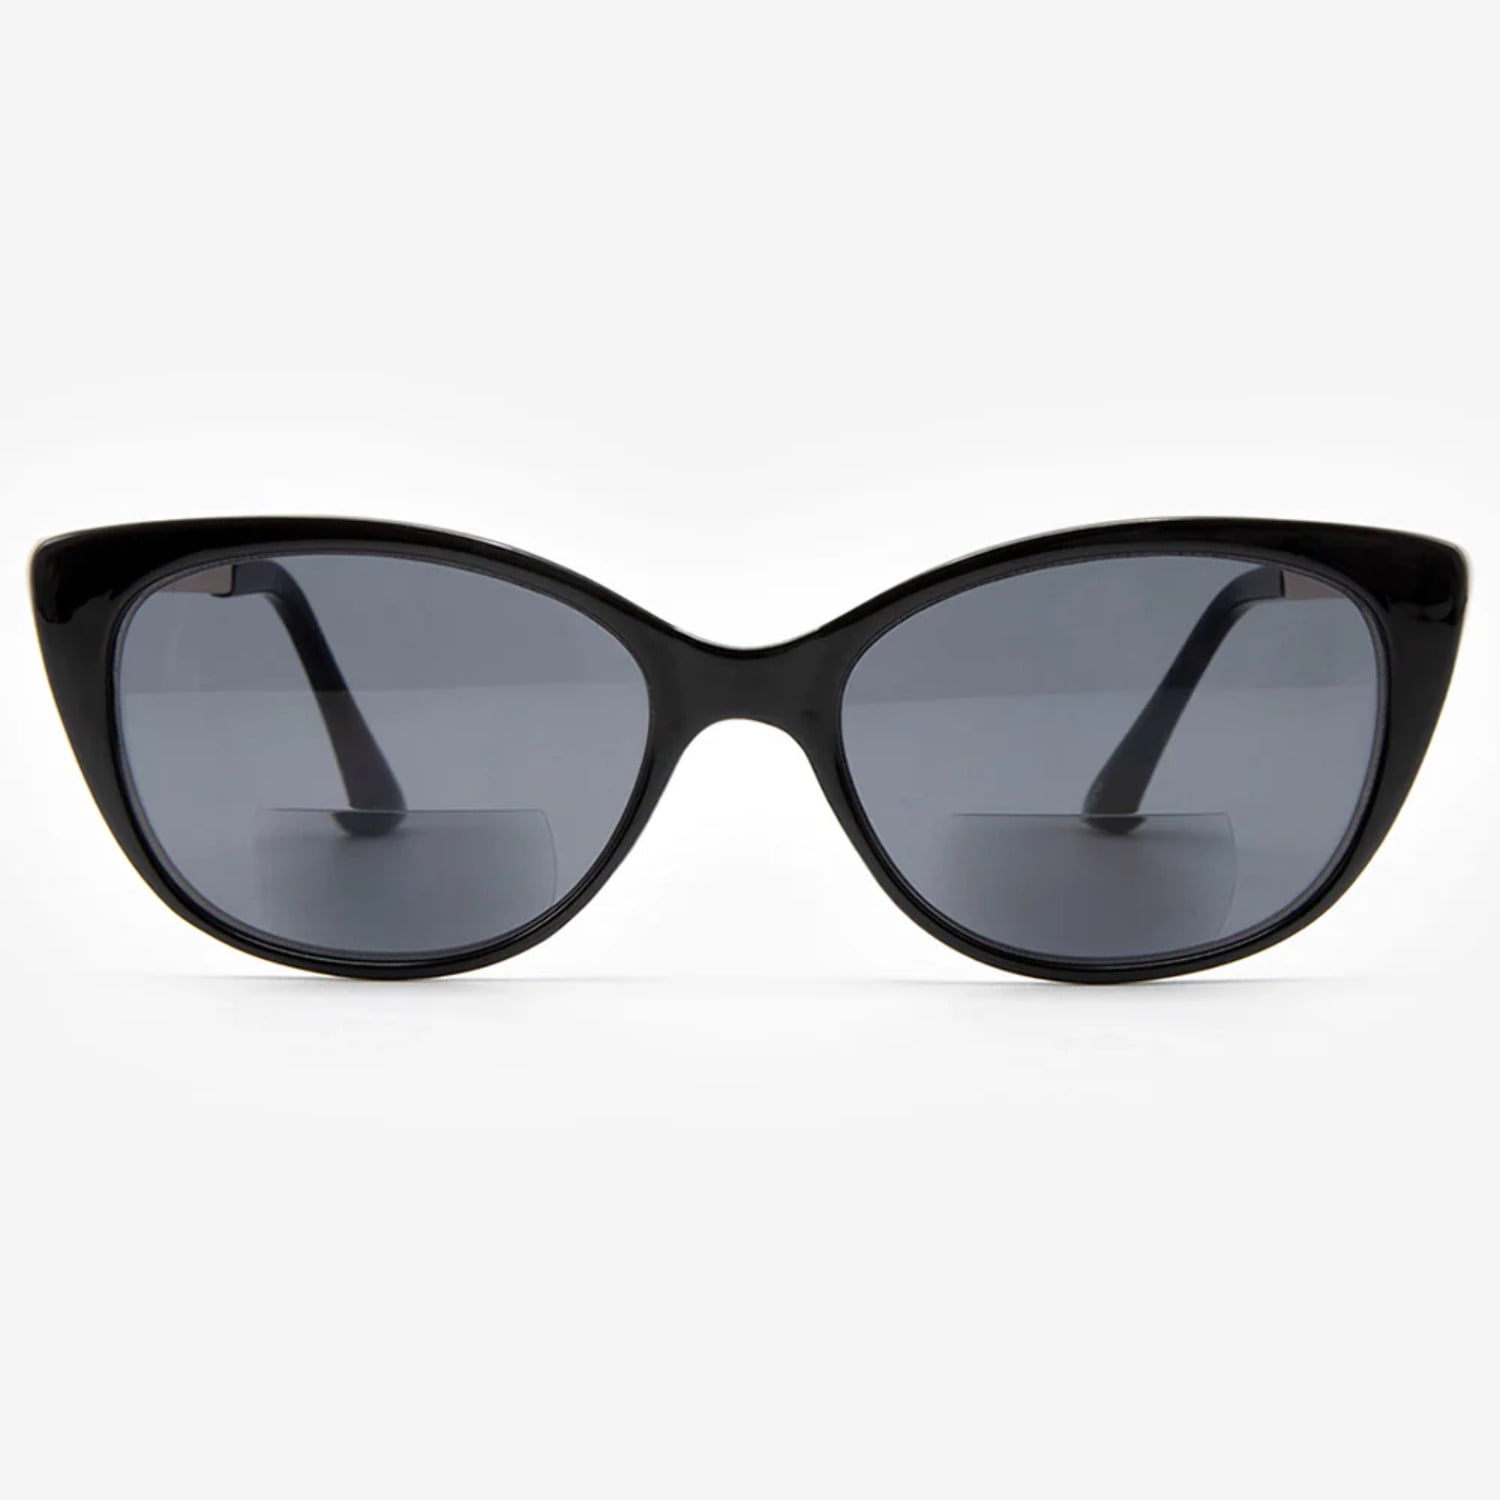 Bifocal Sunglasses For Women Reader Sunglasses With Bifocals Cat Eye Reading Sun Glasses